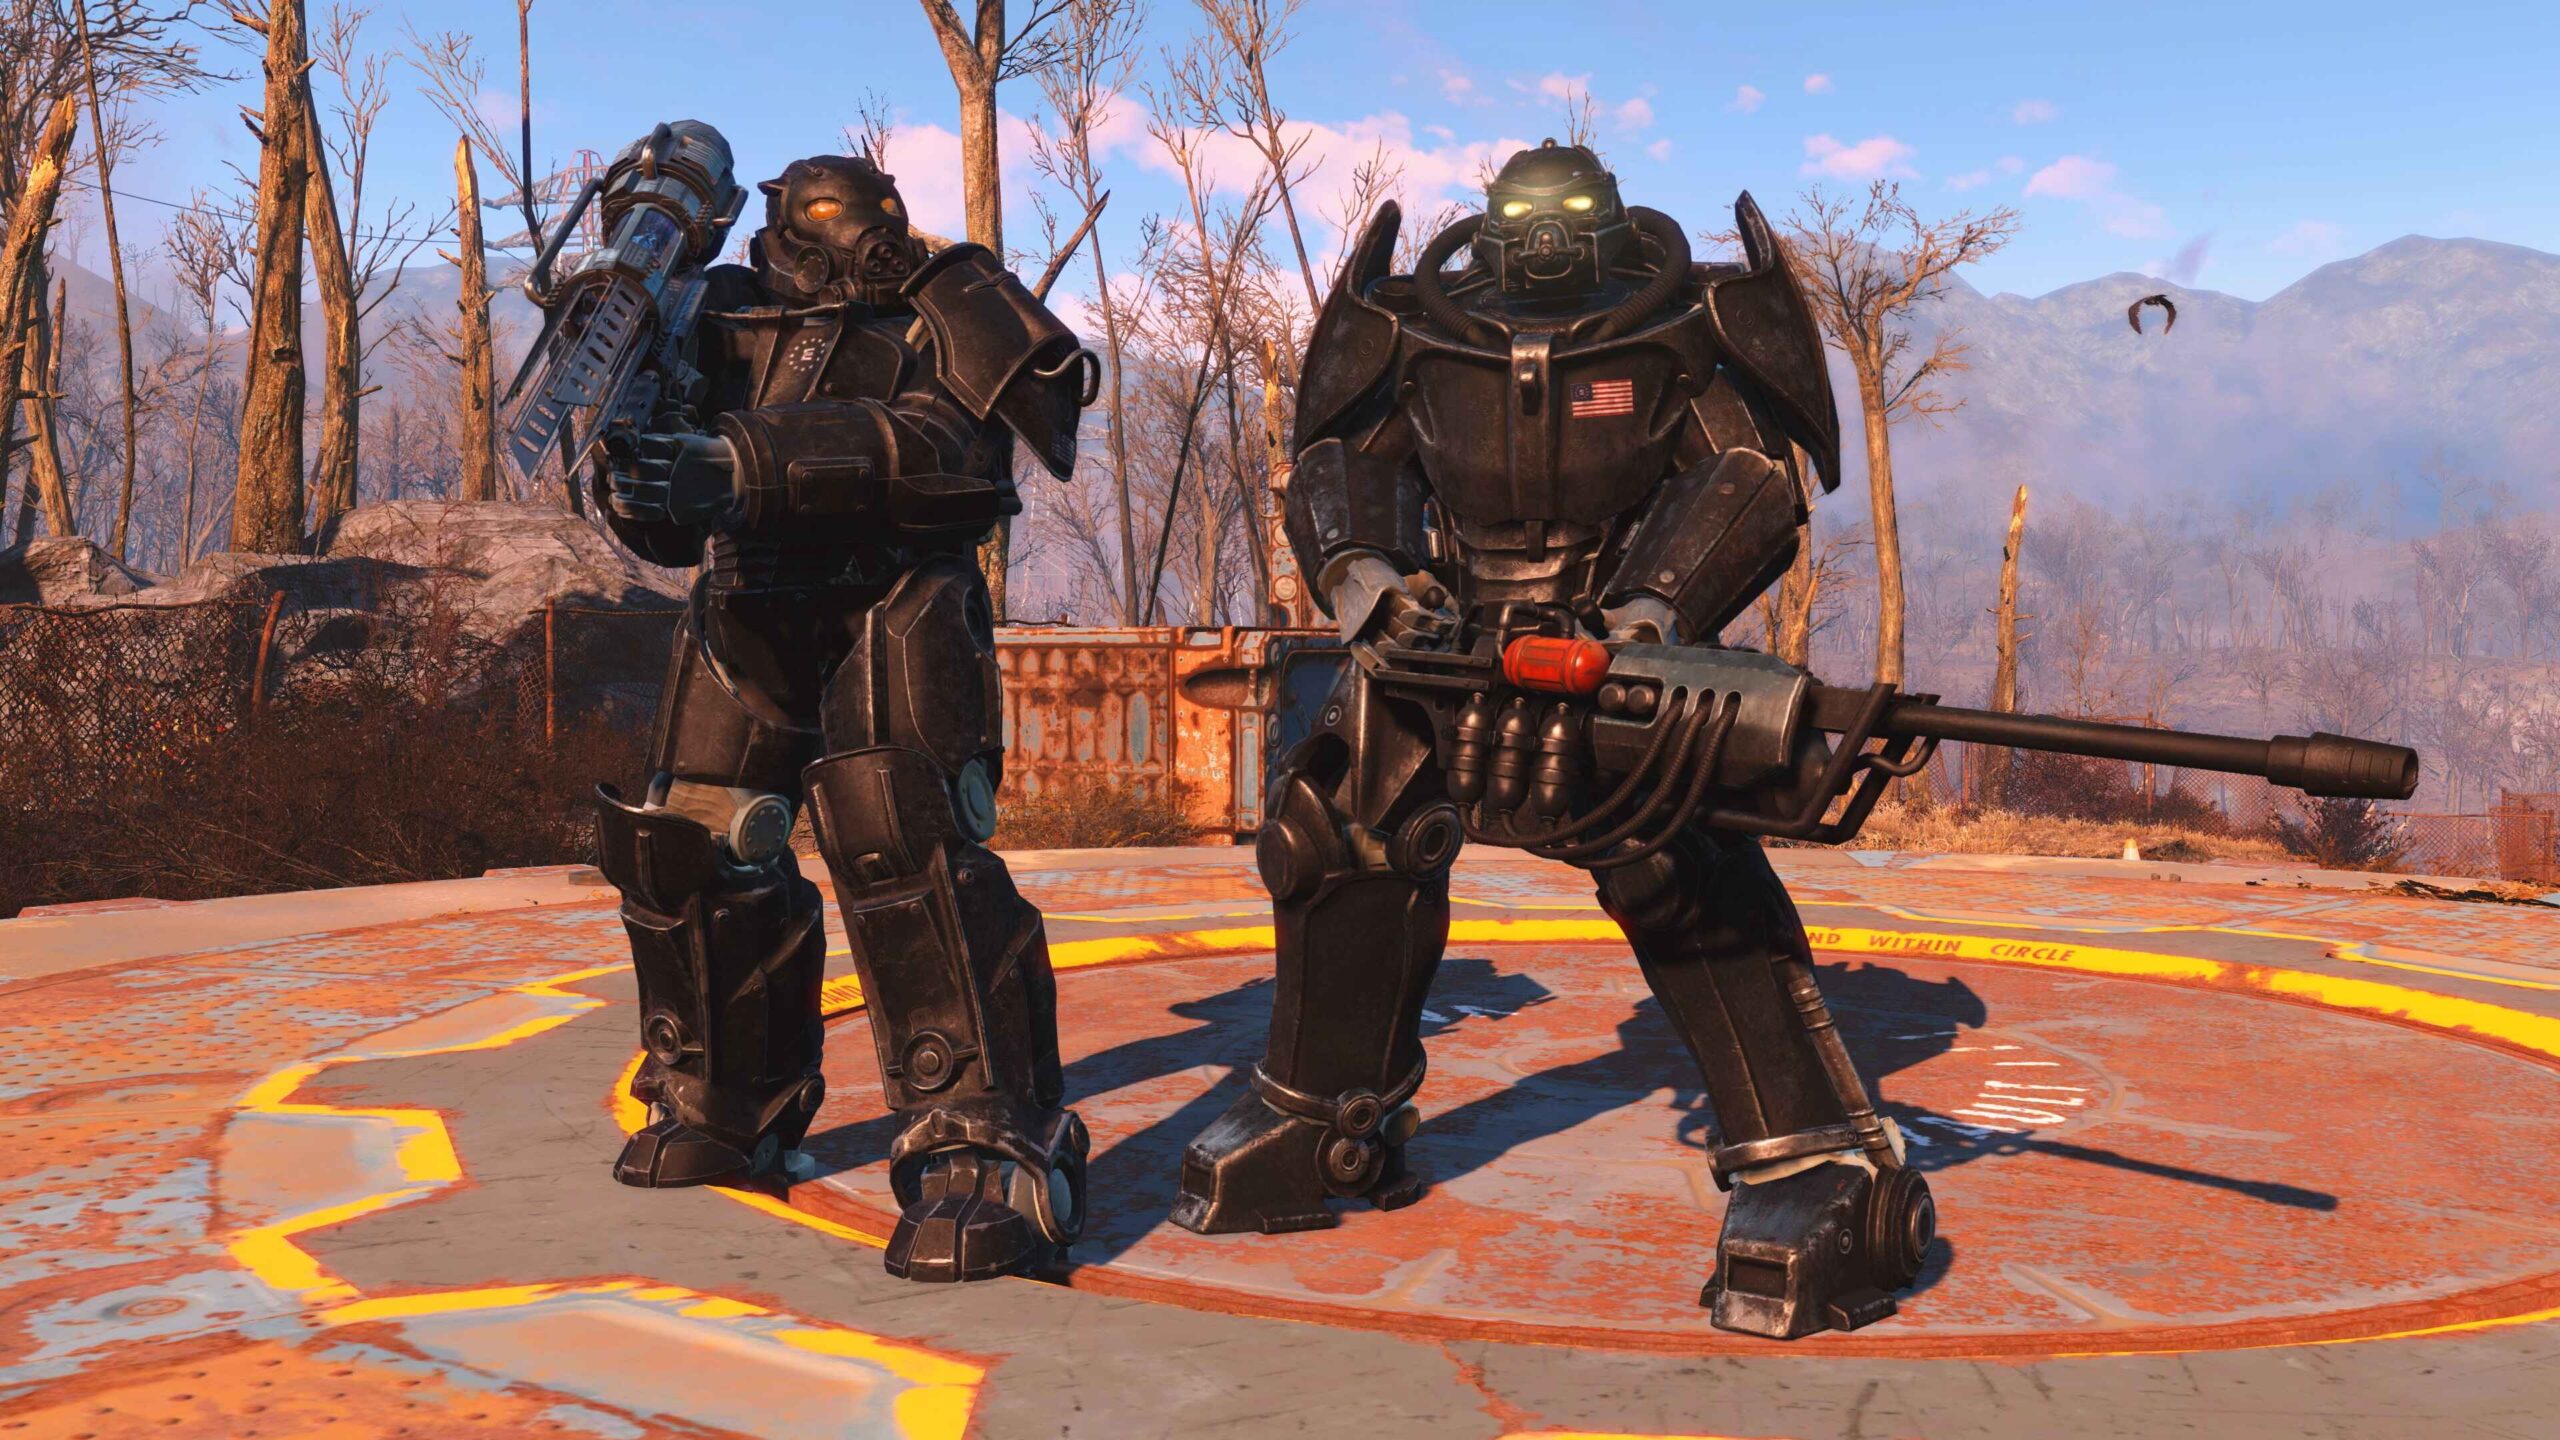 Fallout 4 Next Gen Update – Bethesda Adds Enclave Quest, Weapons, Armor, Halloween Workshop